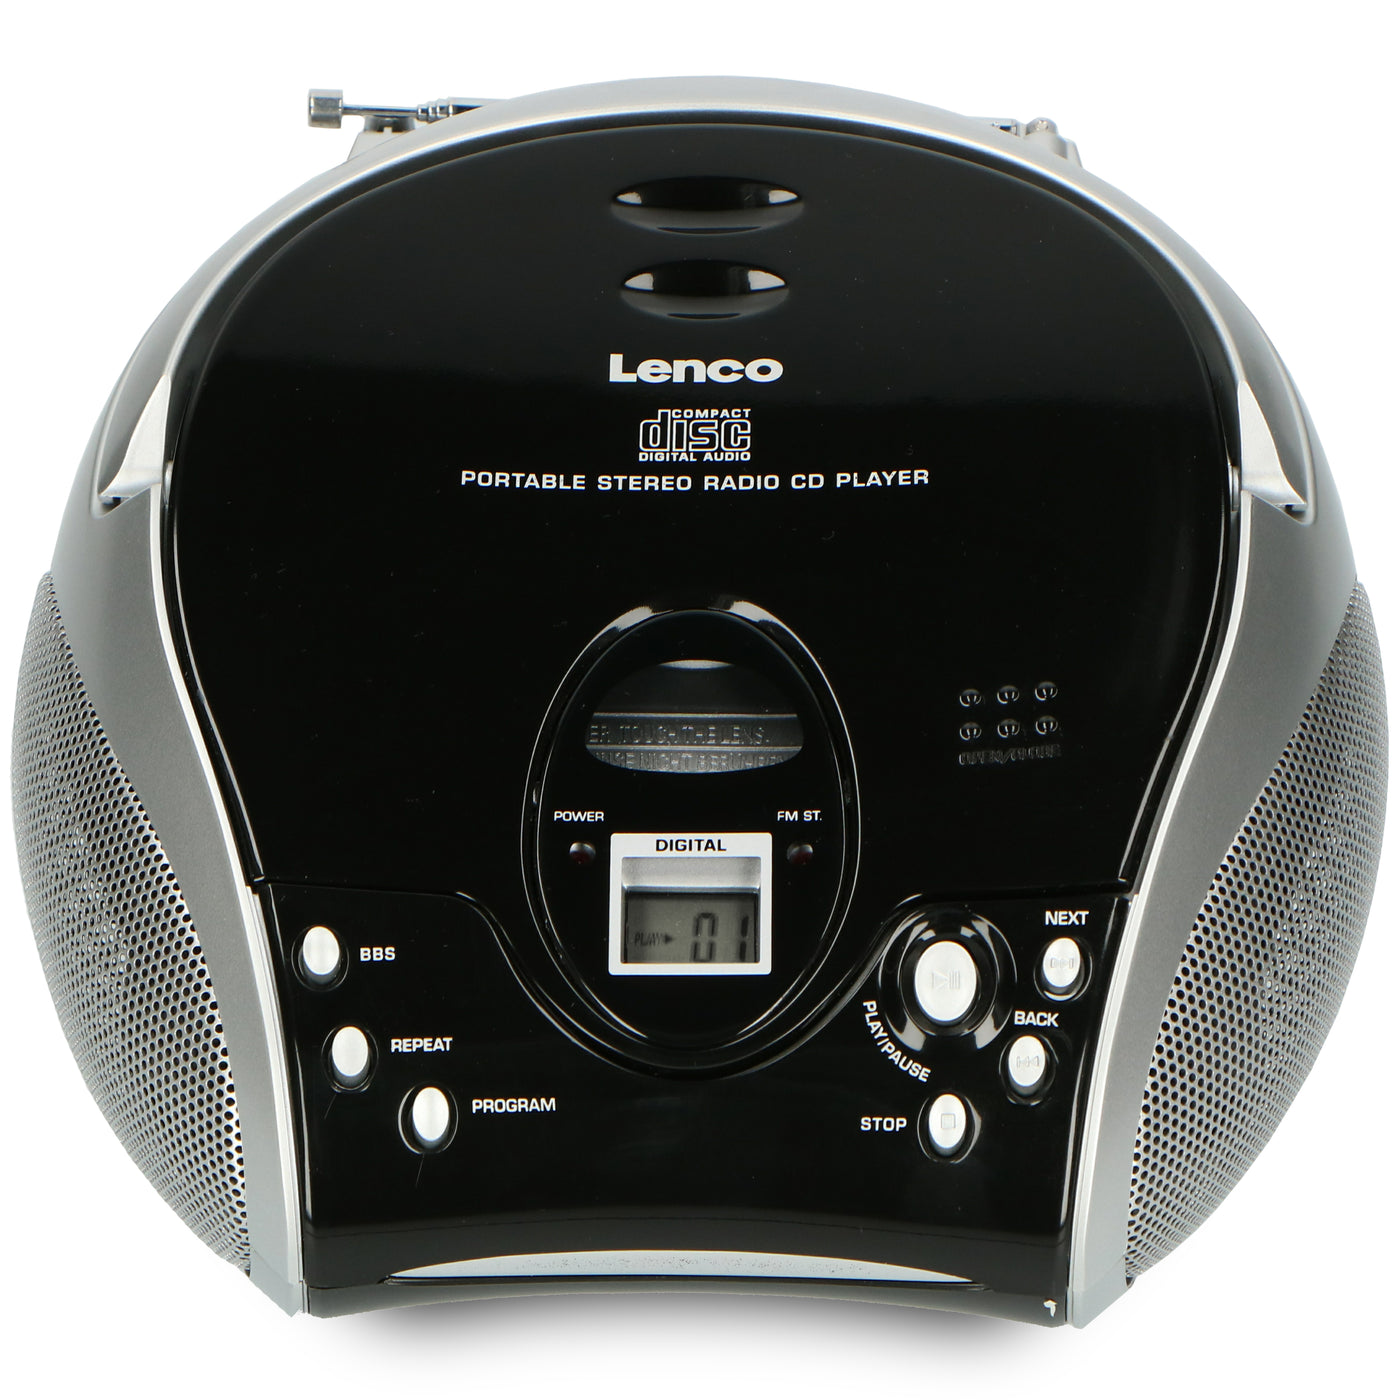 radio CD stereo SCD-24 - FM Black/Silver Lenco-Catalog player – Portable LENCO - with